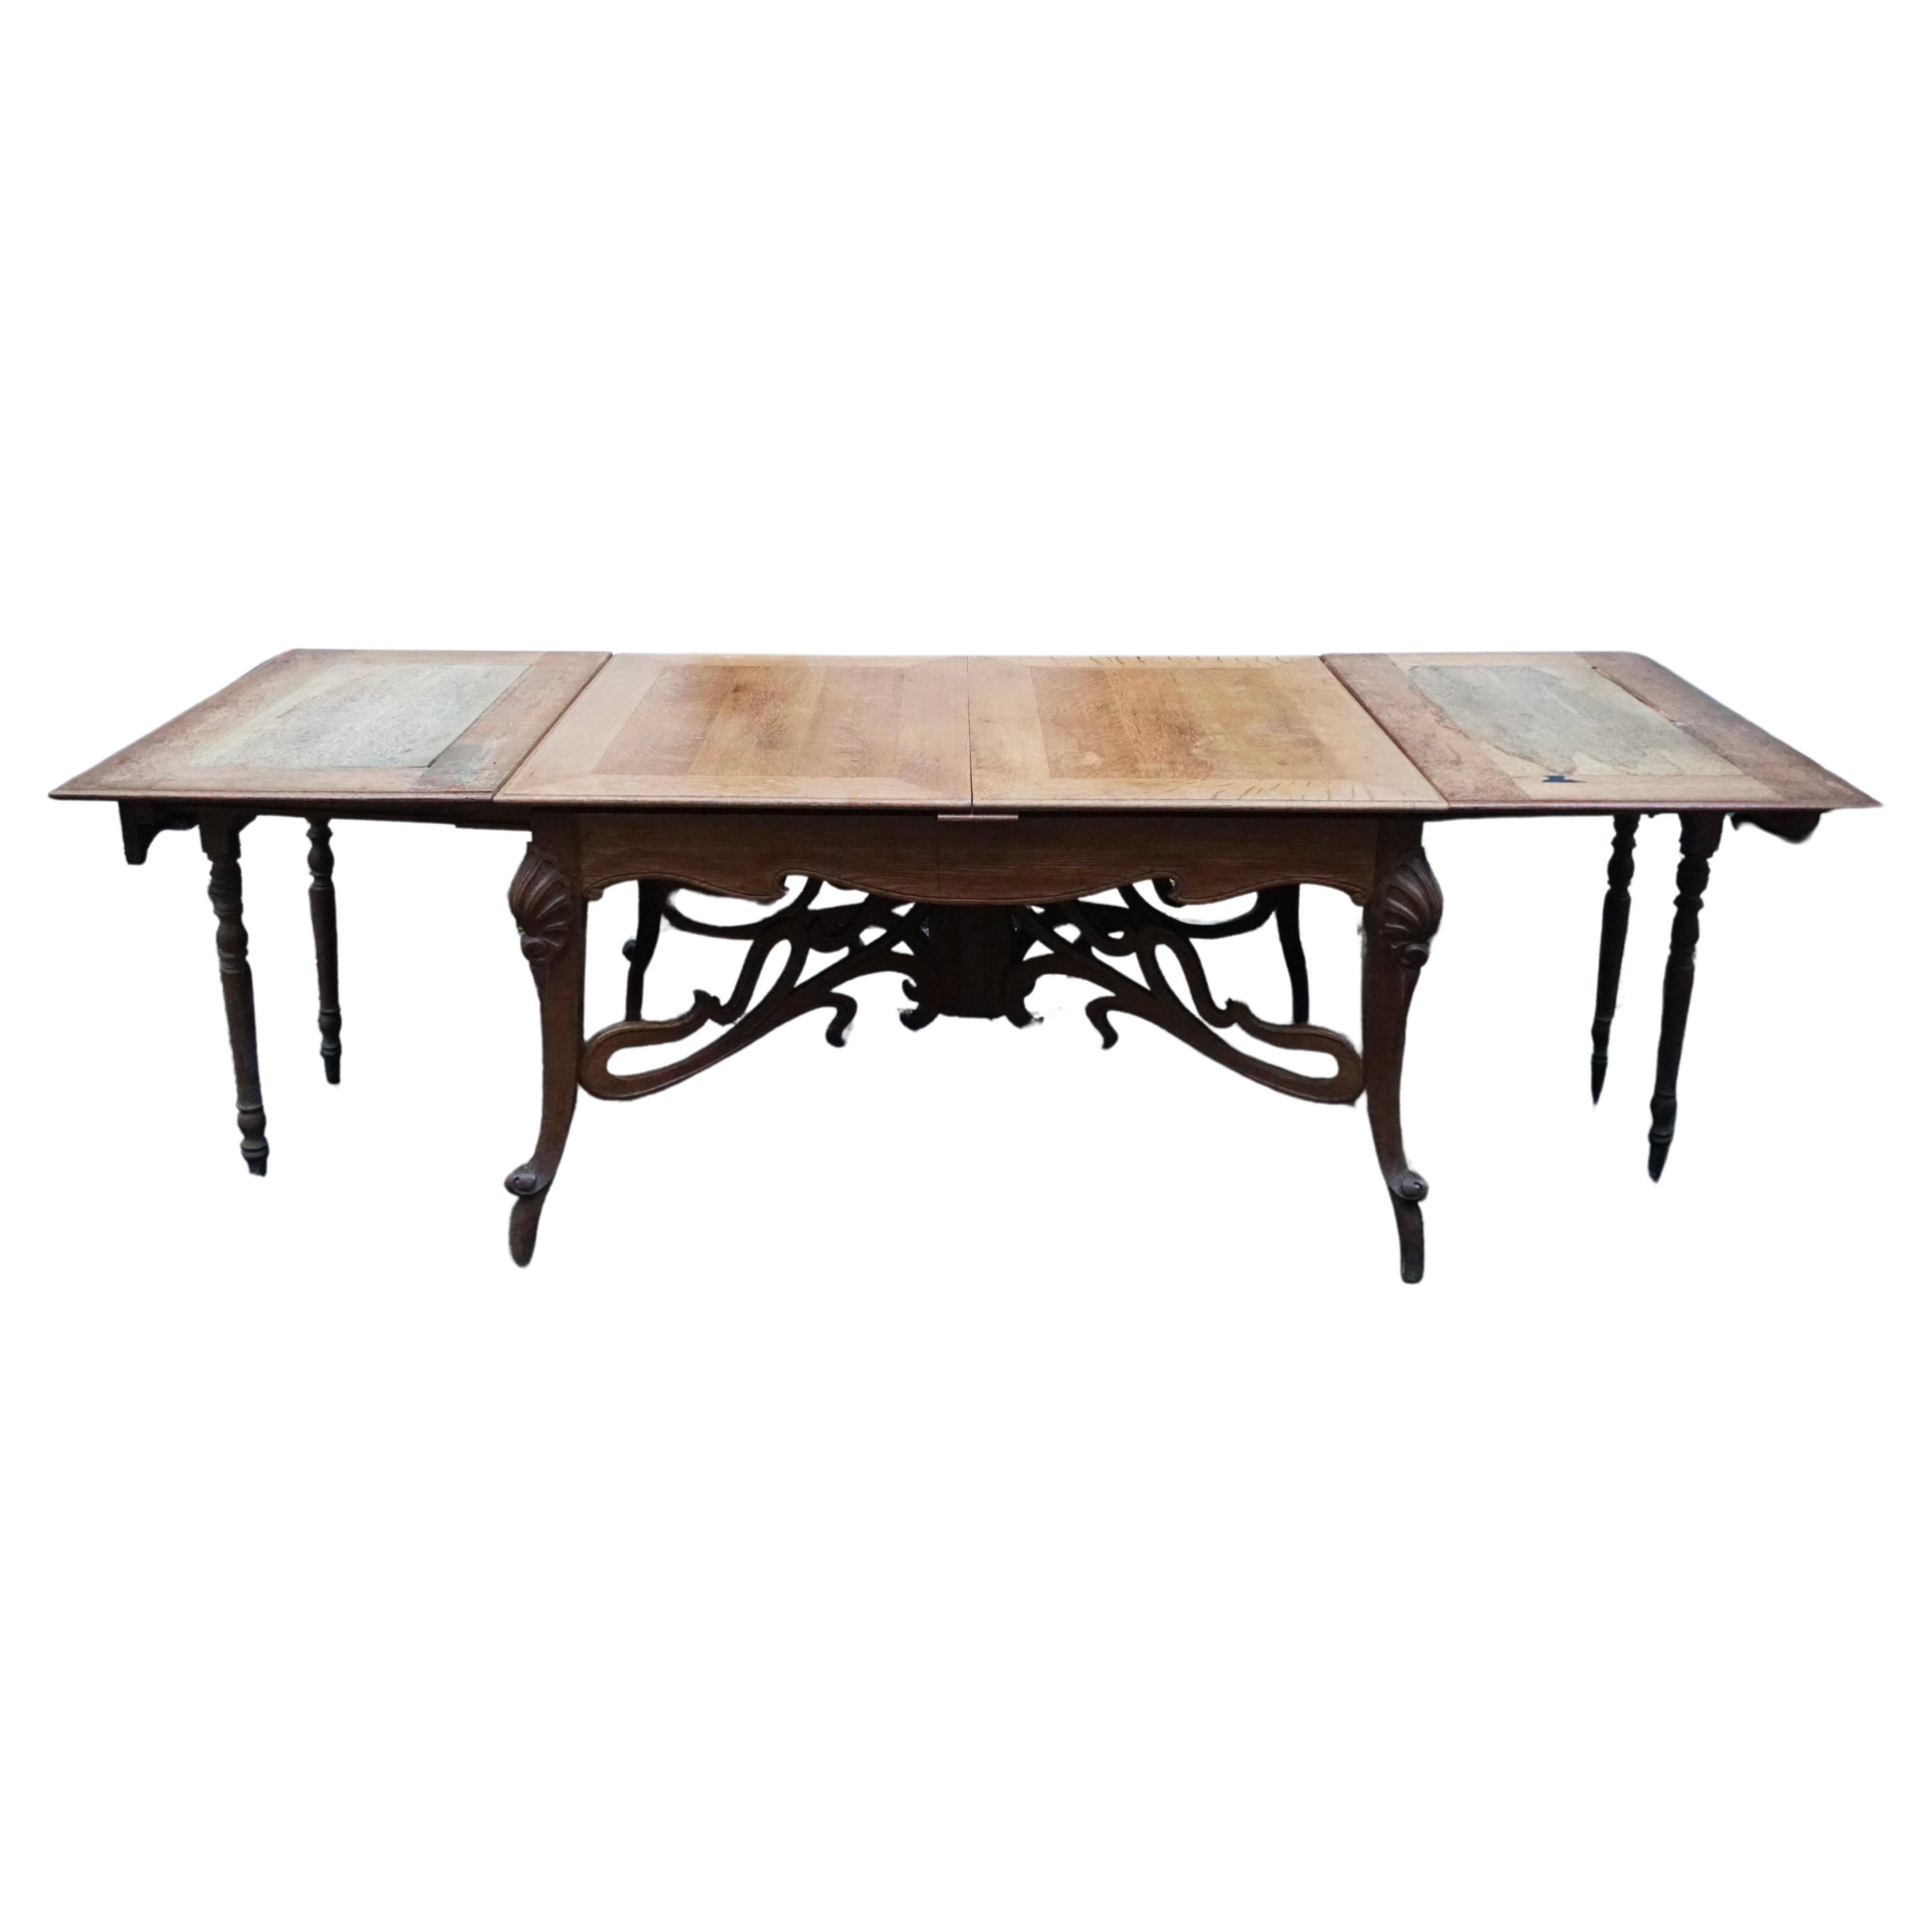 20th Century Art Nouveau Dining Table For Sale